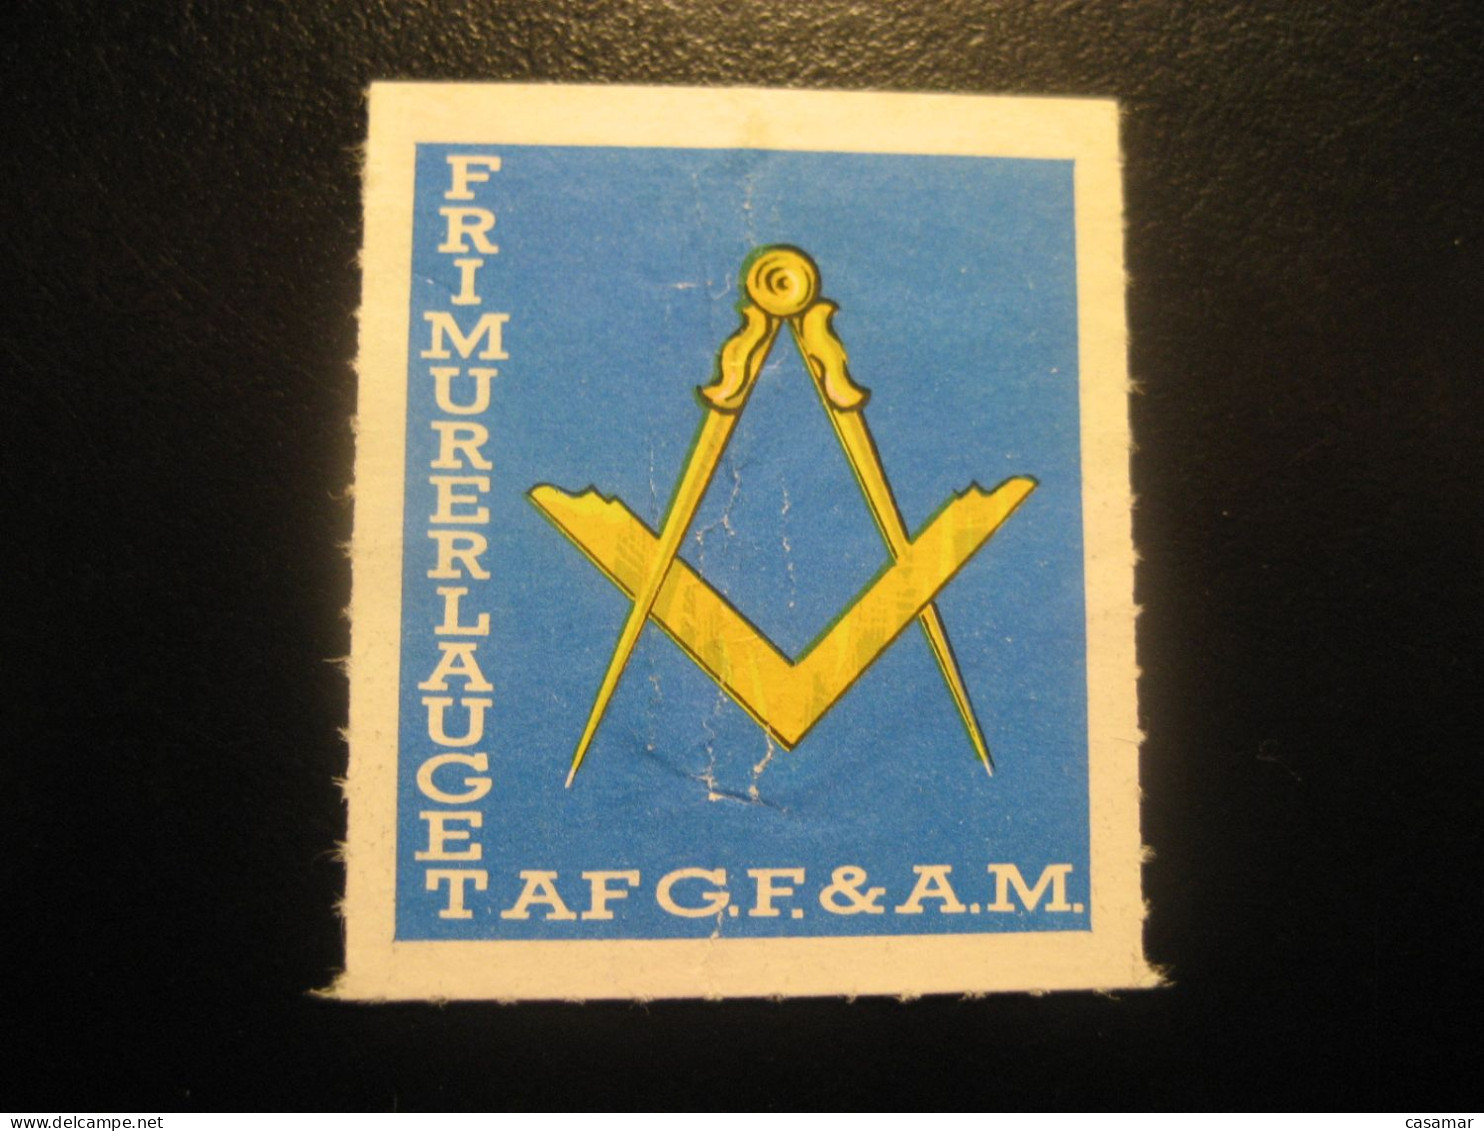 Frimurerlauget AF G.F. & A.M. Freemasonry Masonry Masonic Lodge Perces Zig Zag Poster Stamp Vignette DENMARK Label - Francmasonería